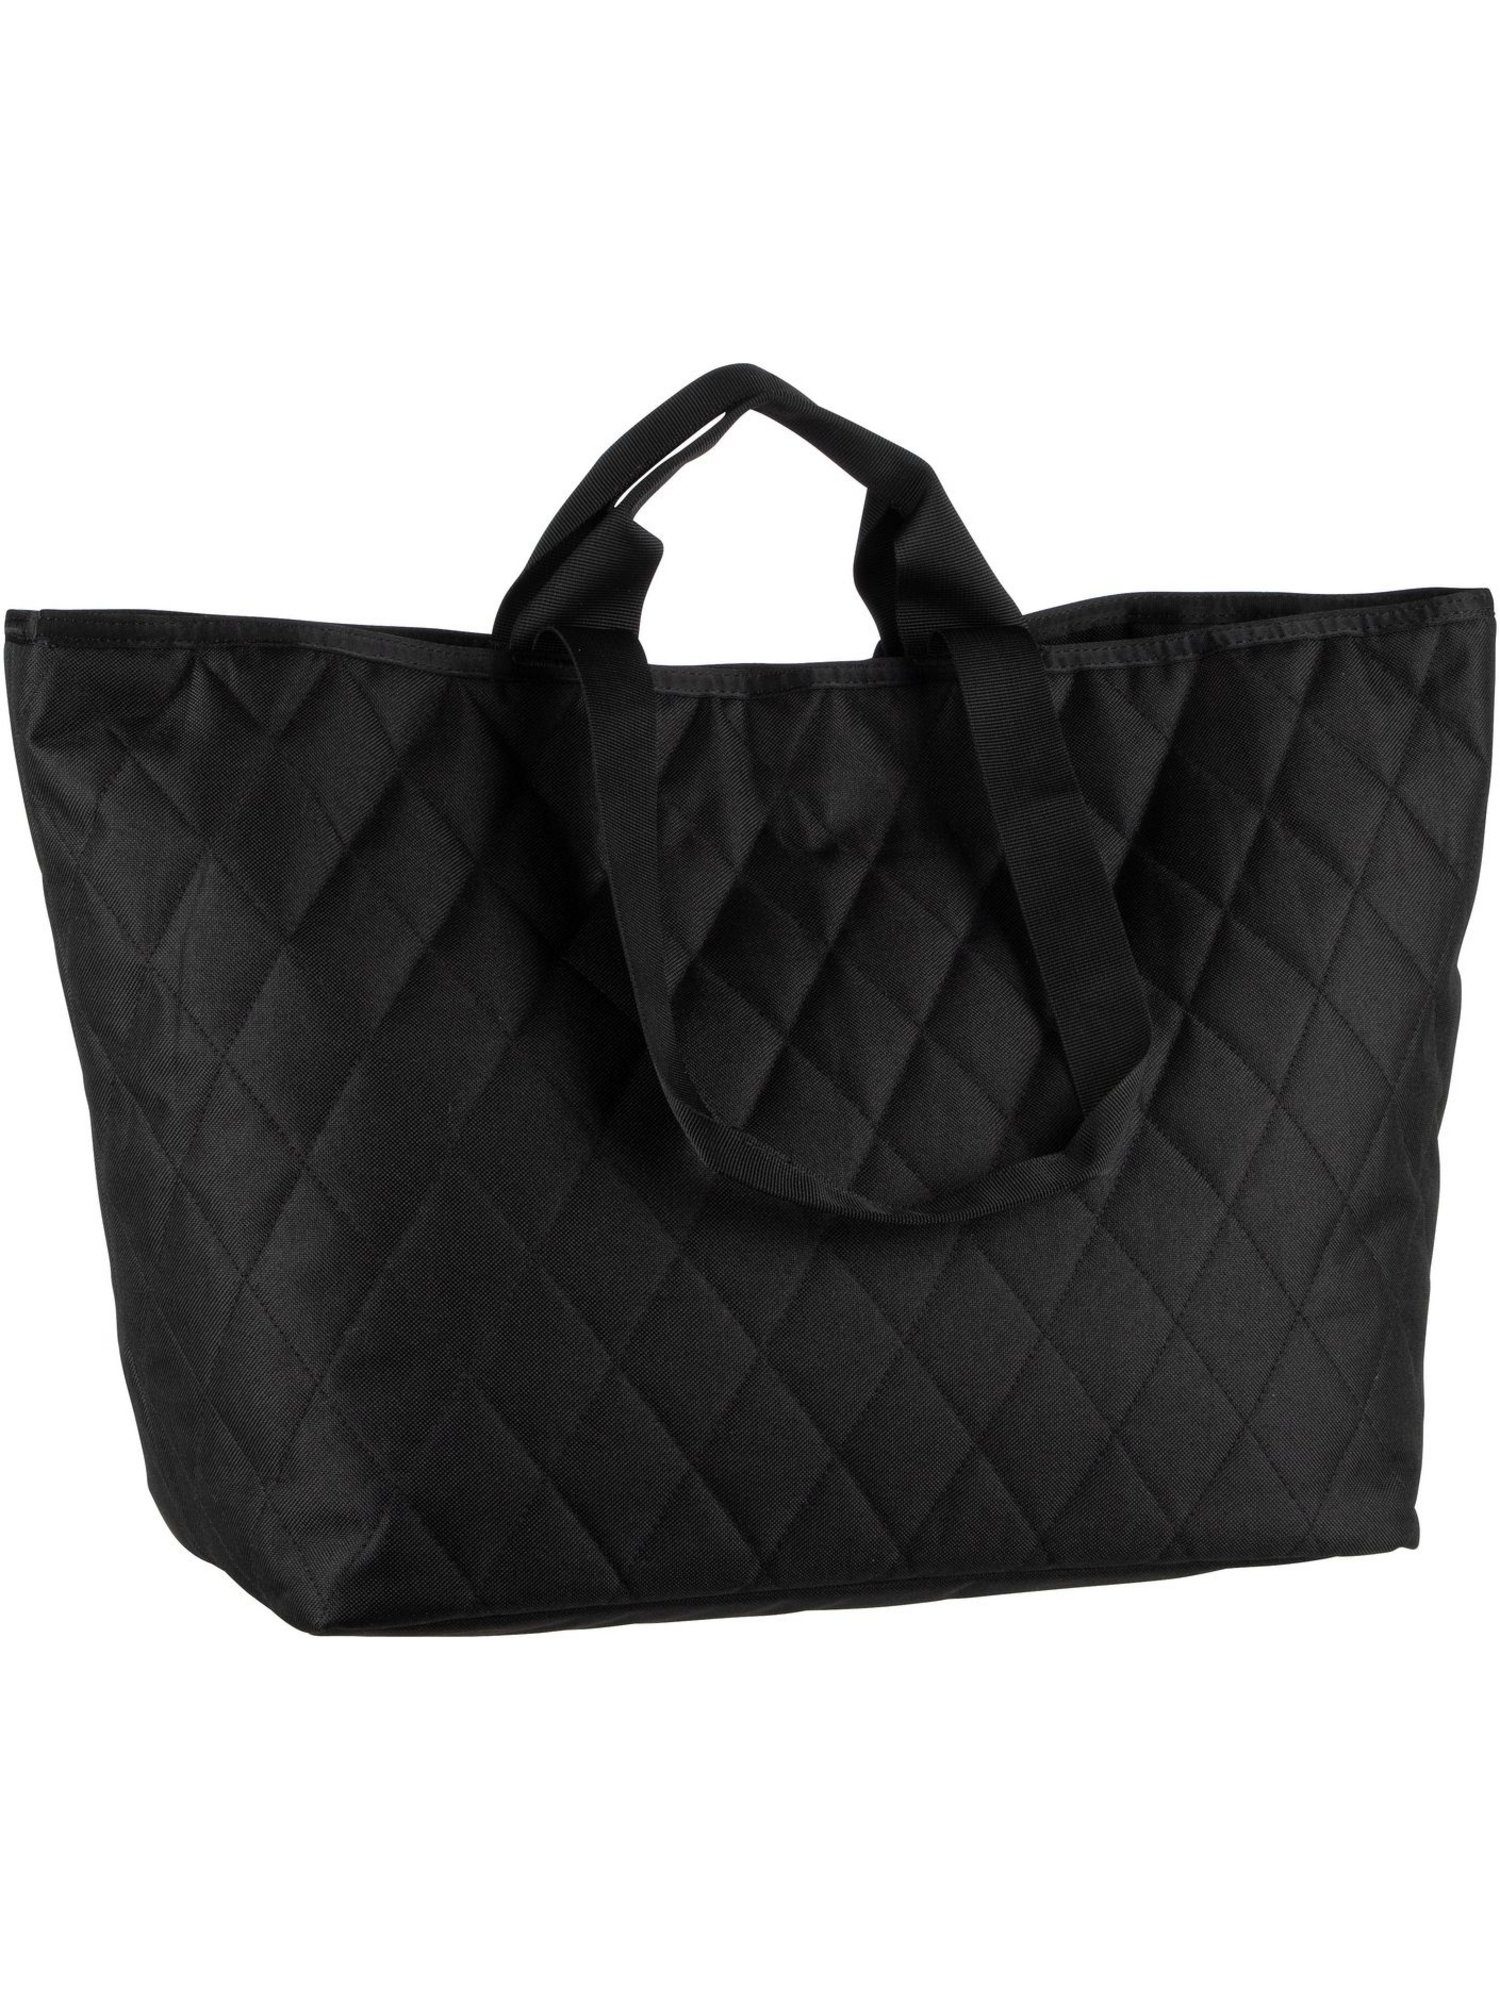 REISENTHEL® Shopper classic XL shopper Rhombus Black